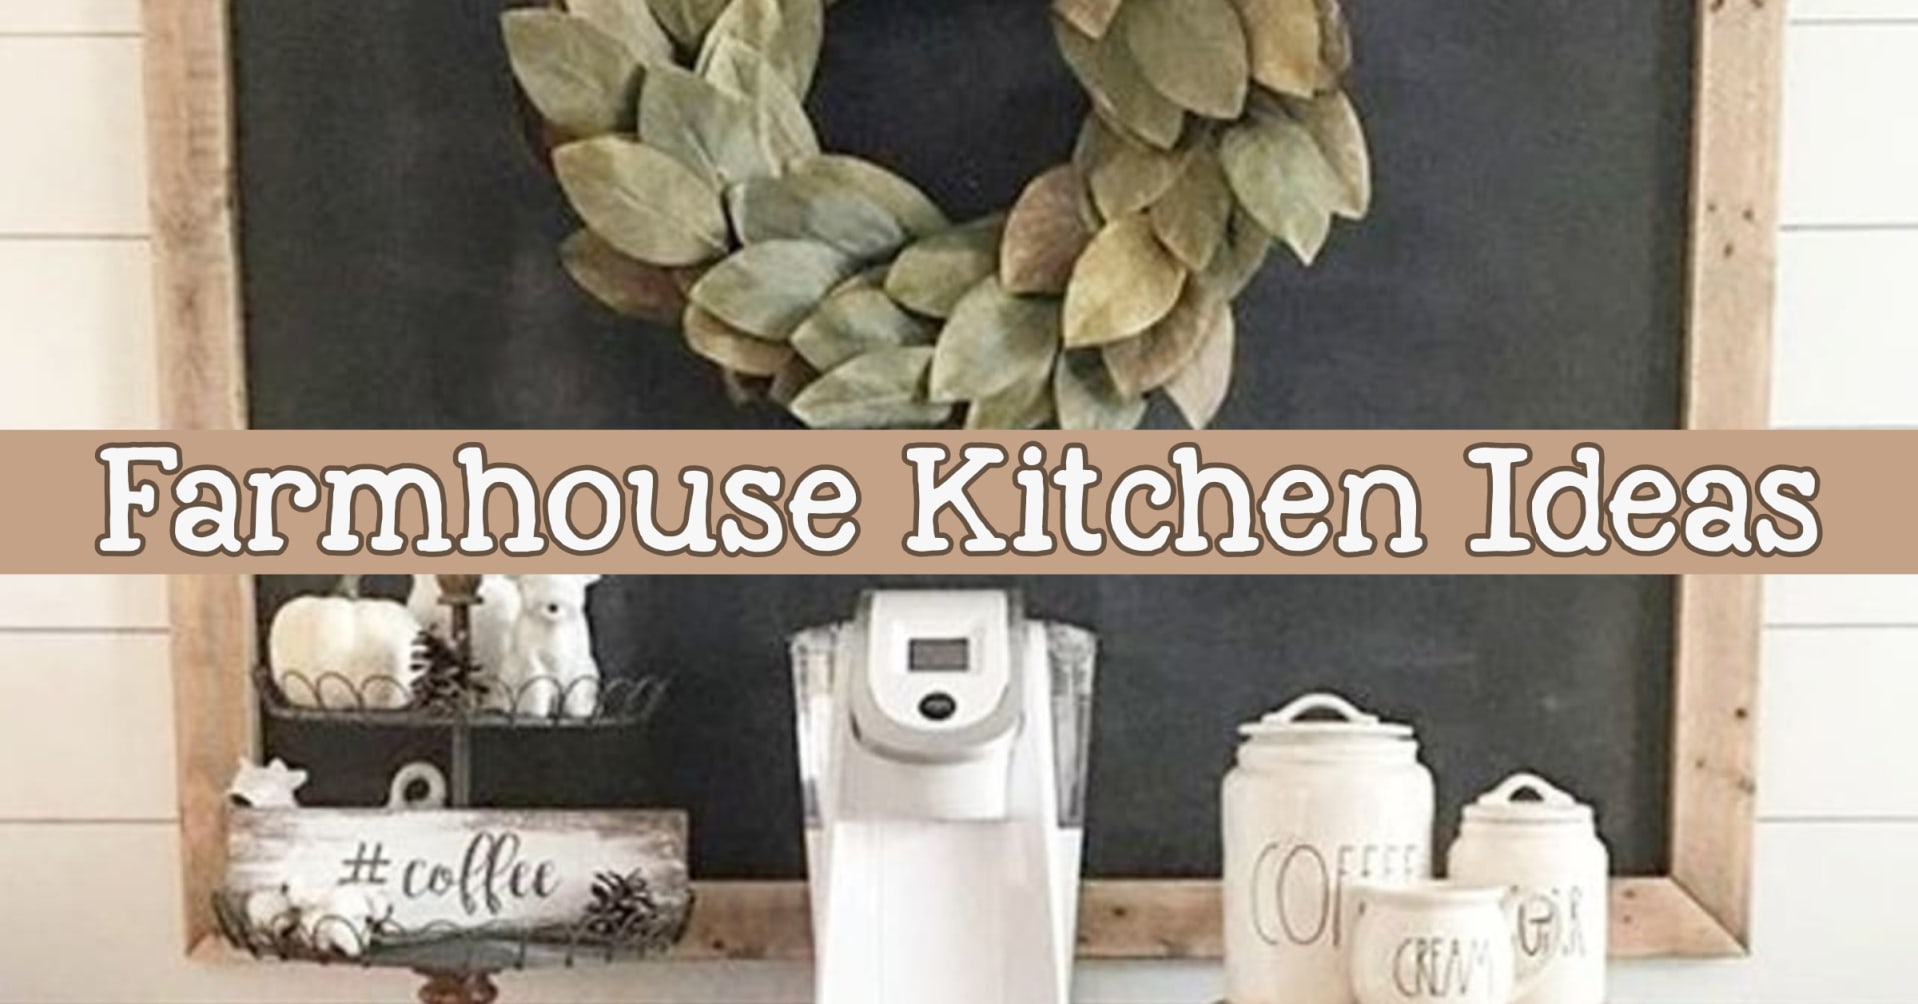 Farmhouse Kitchen Canister Sets And Farmhouse Kitchen Decor Ideas Coffee Bar Ideas Too,United Change Flight Fee